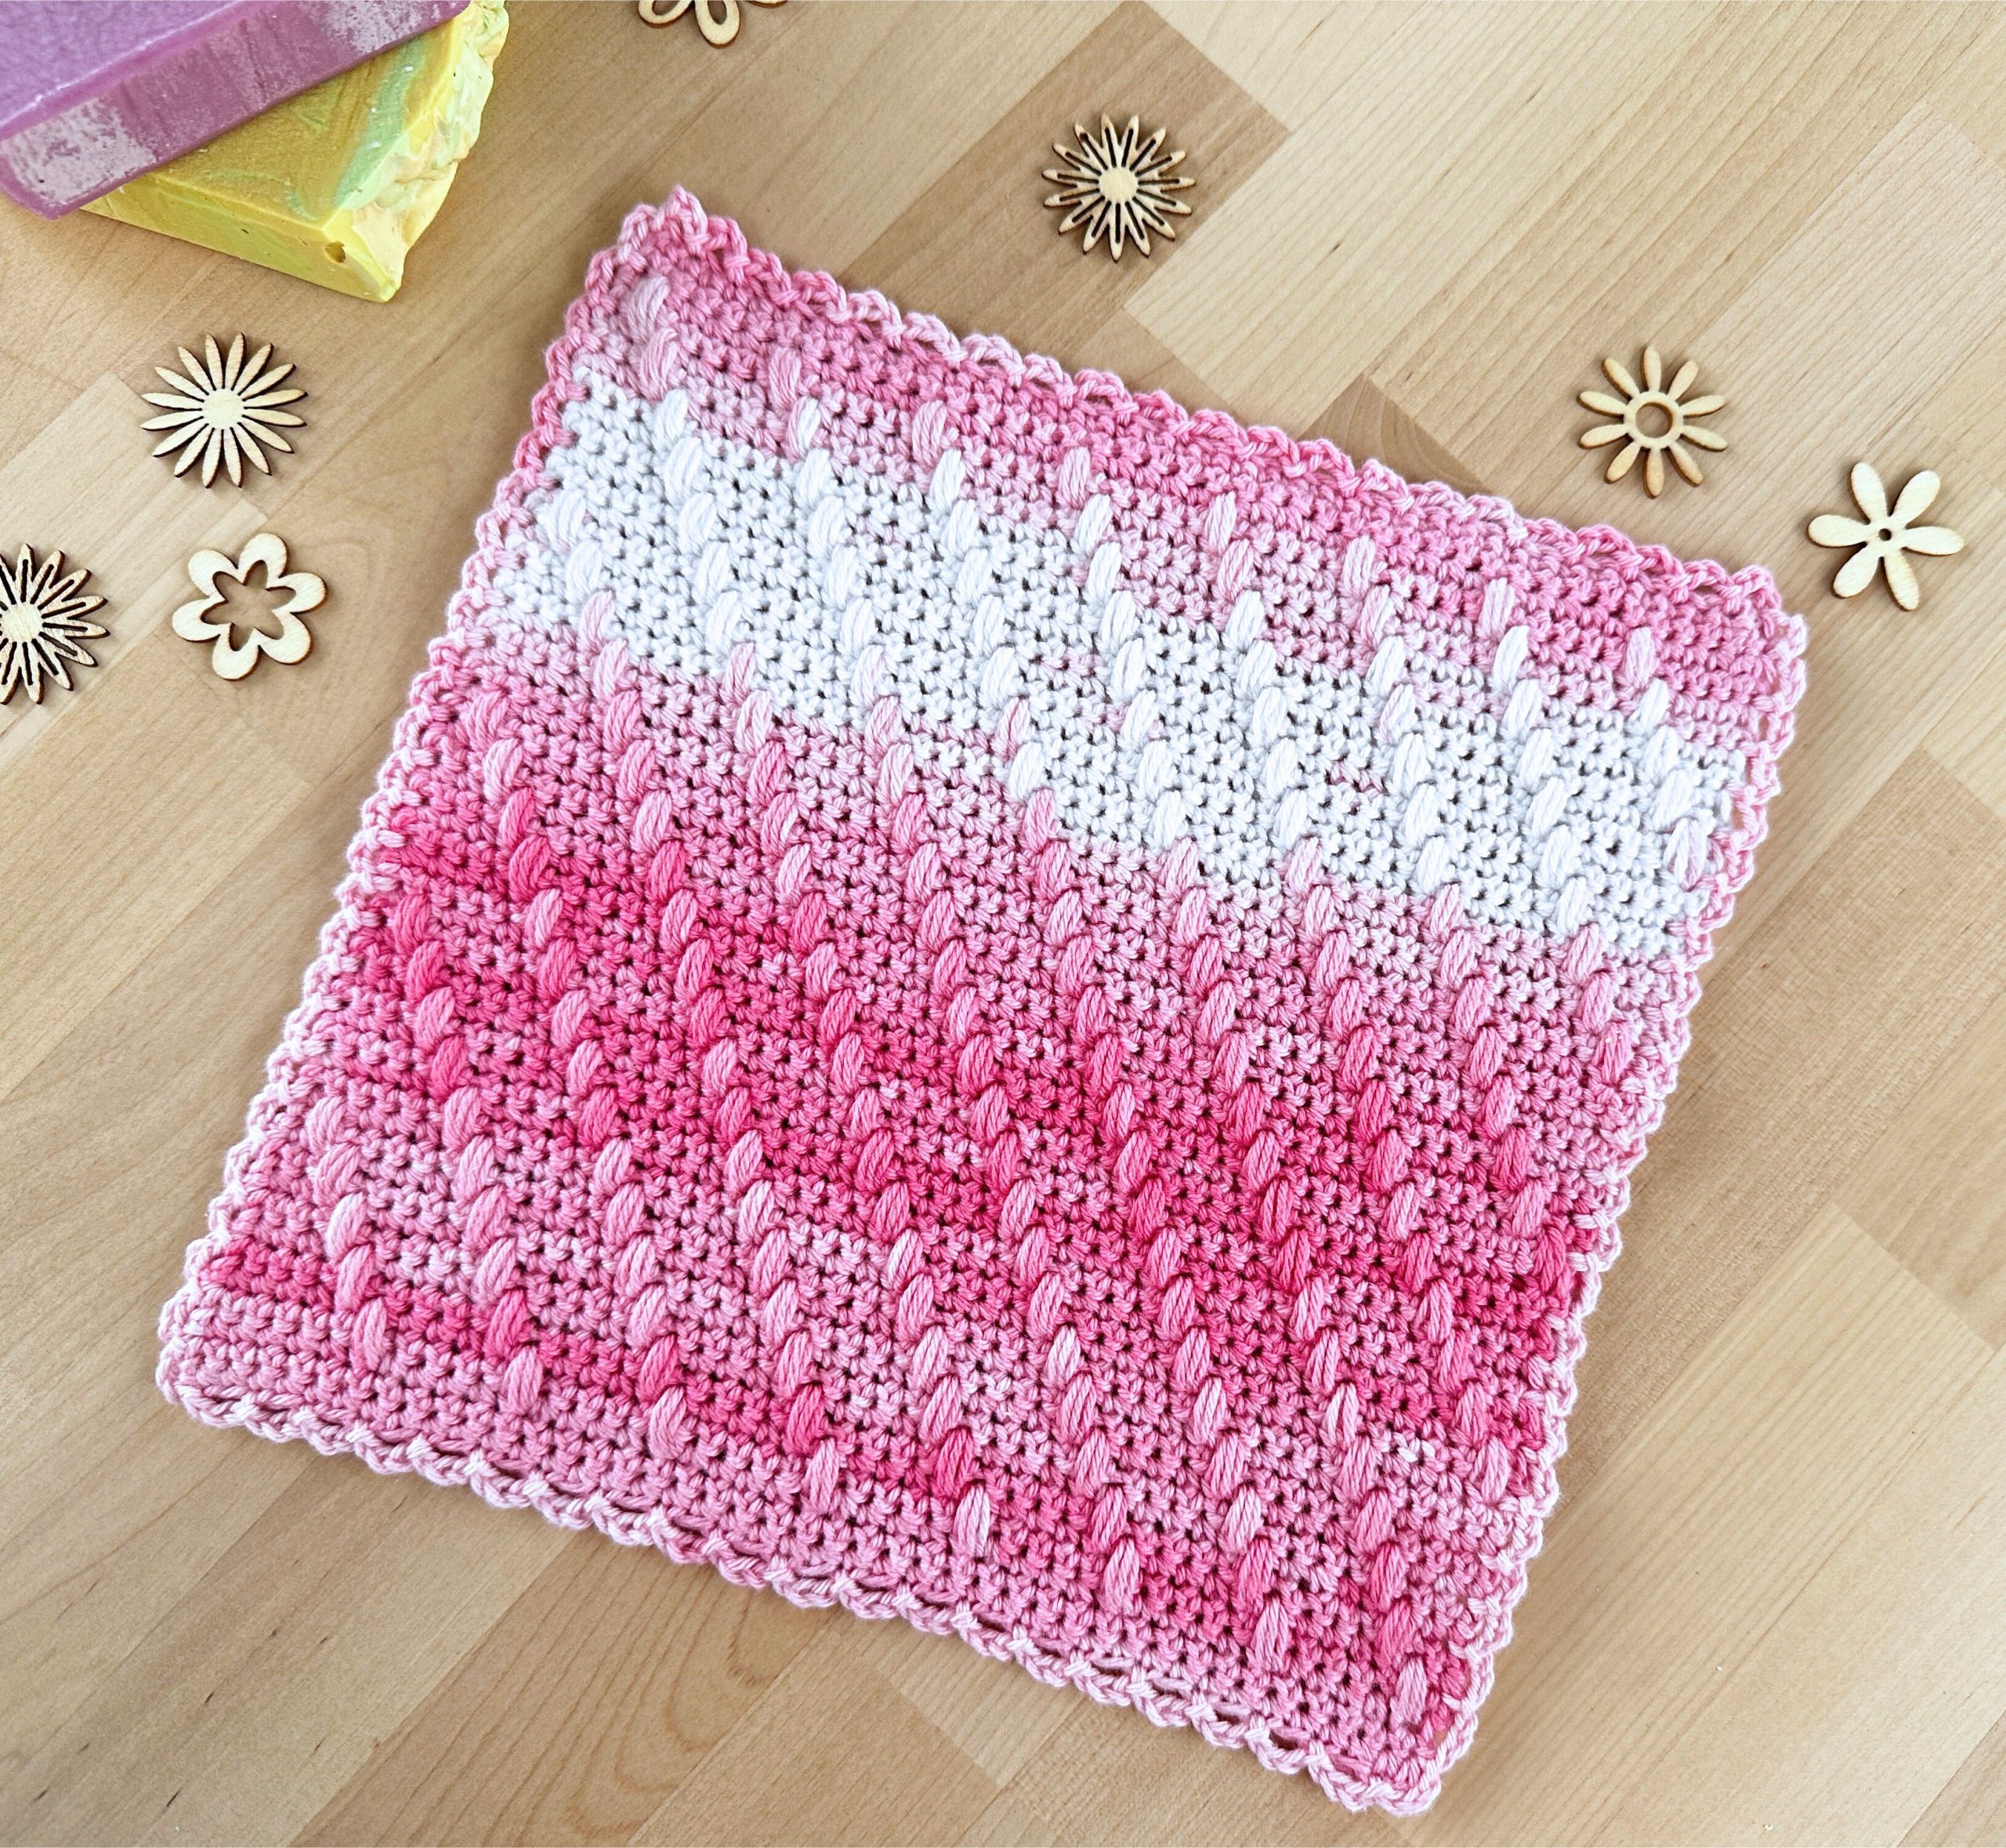 Morning Glow Crochet Washcloth - My Crochet Space